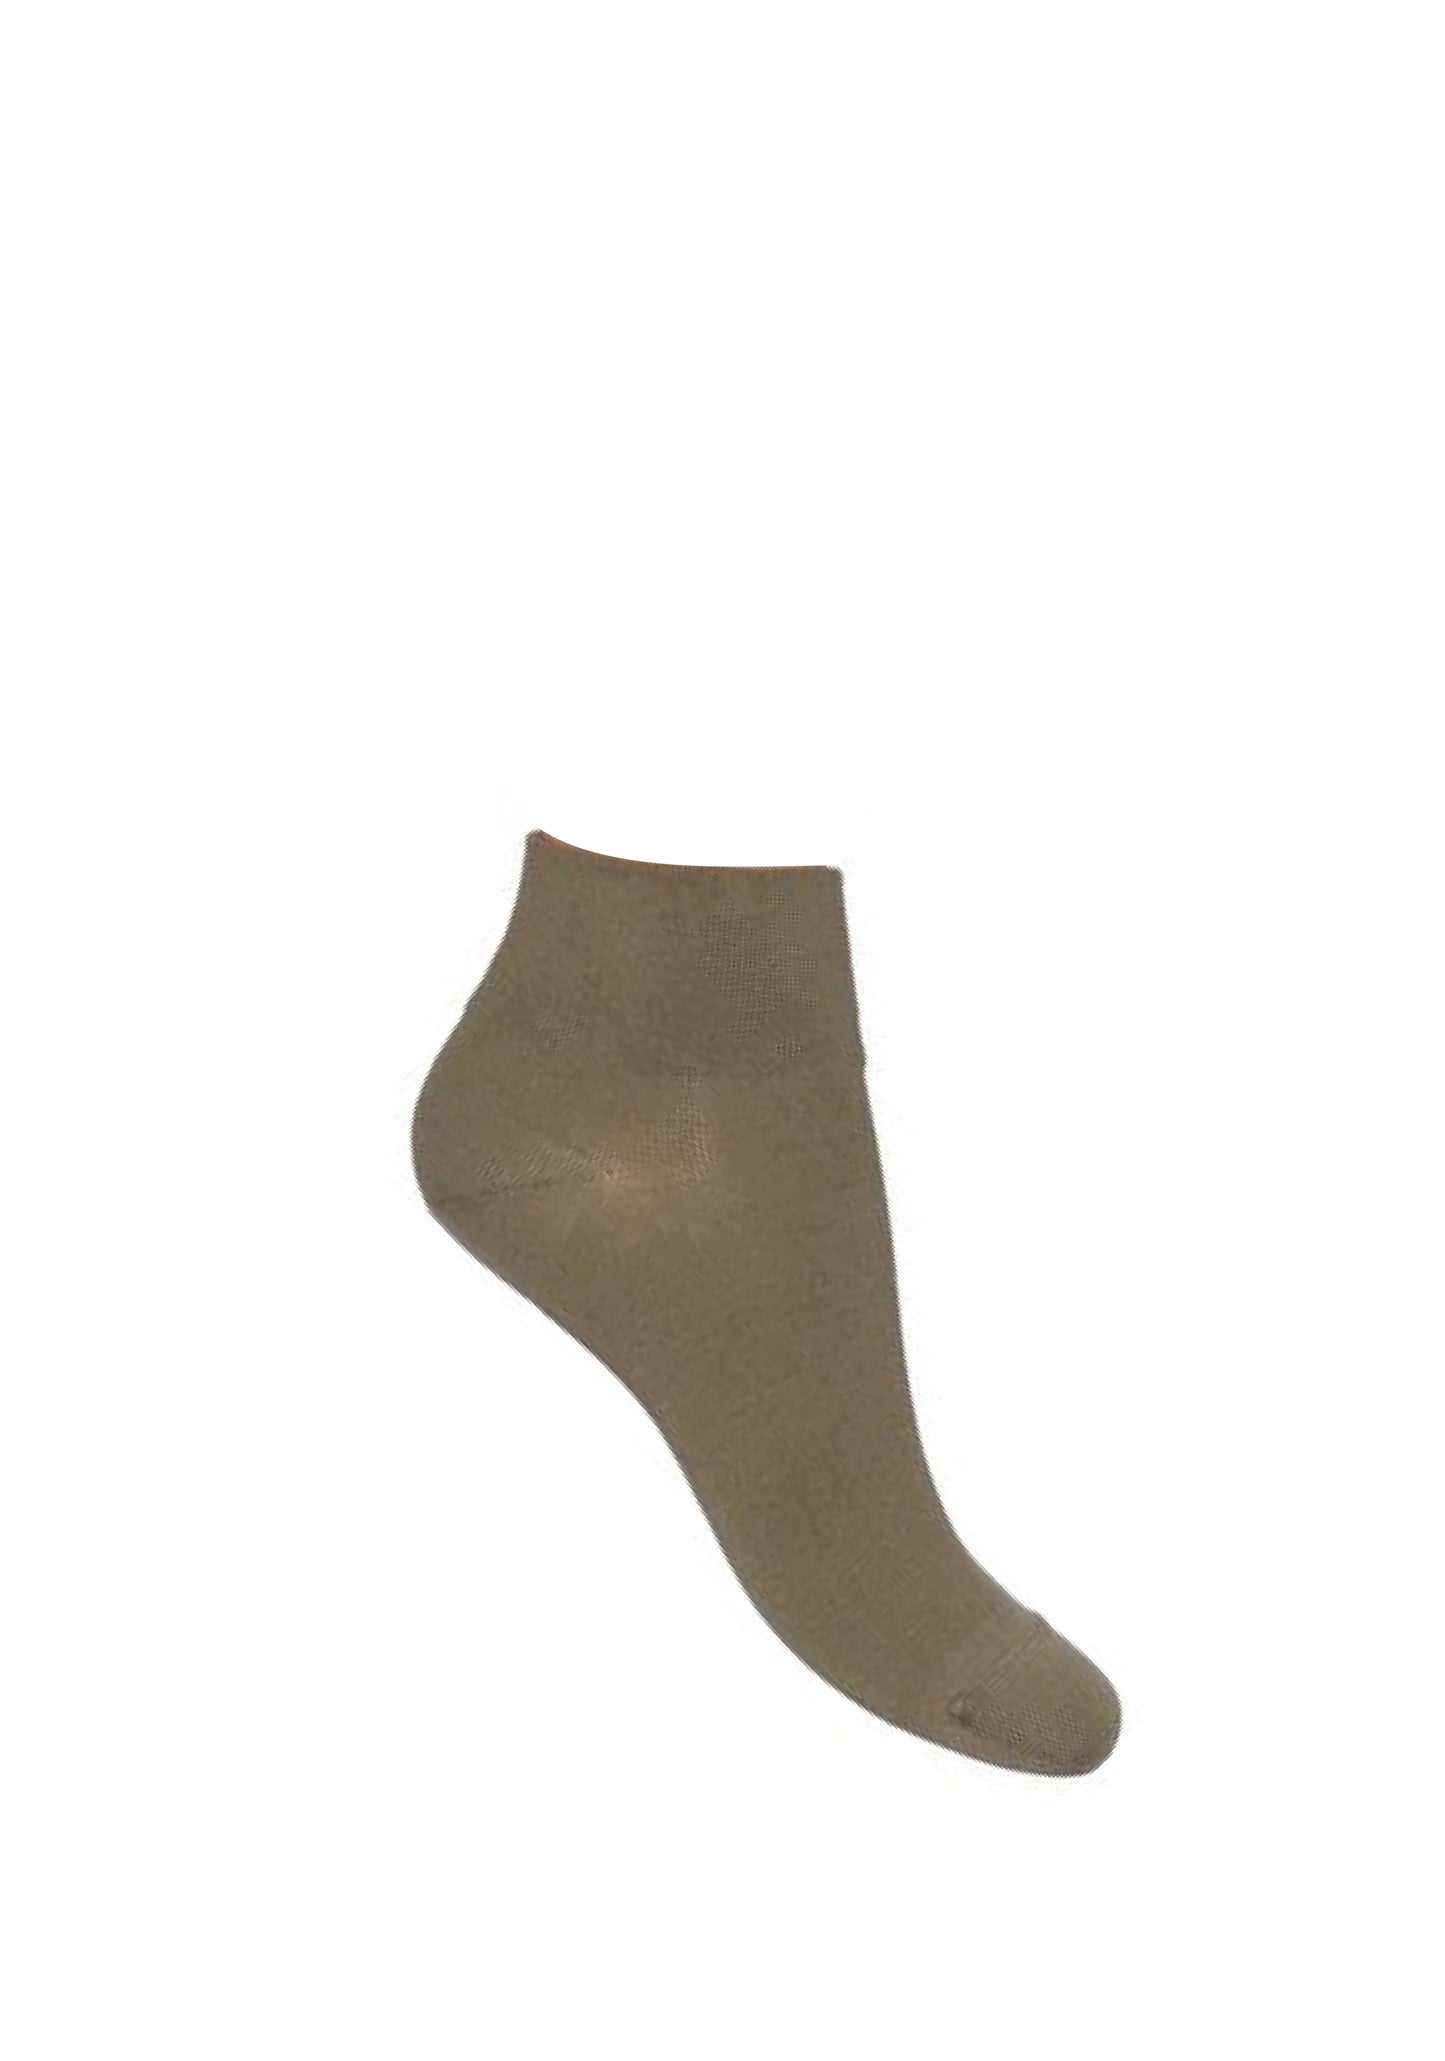 Bonnie Doon Basic Cotton Quarter BN761100 - faded khaki ankle sock